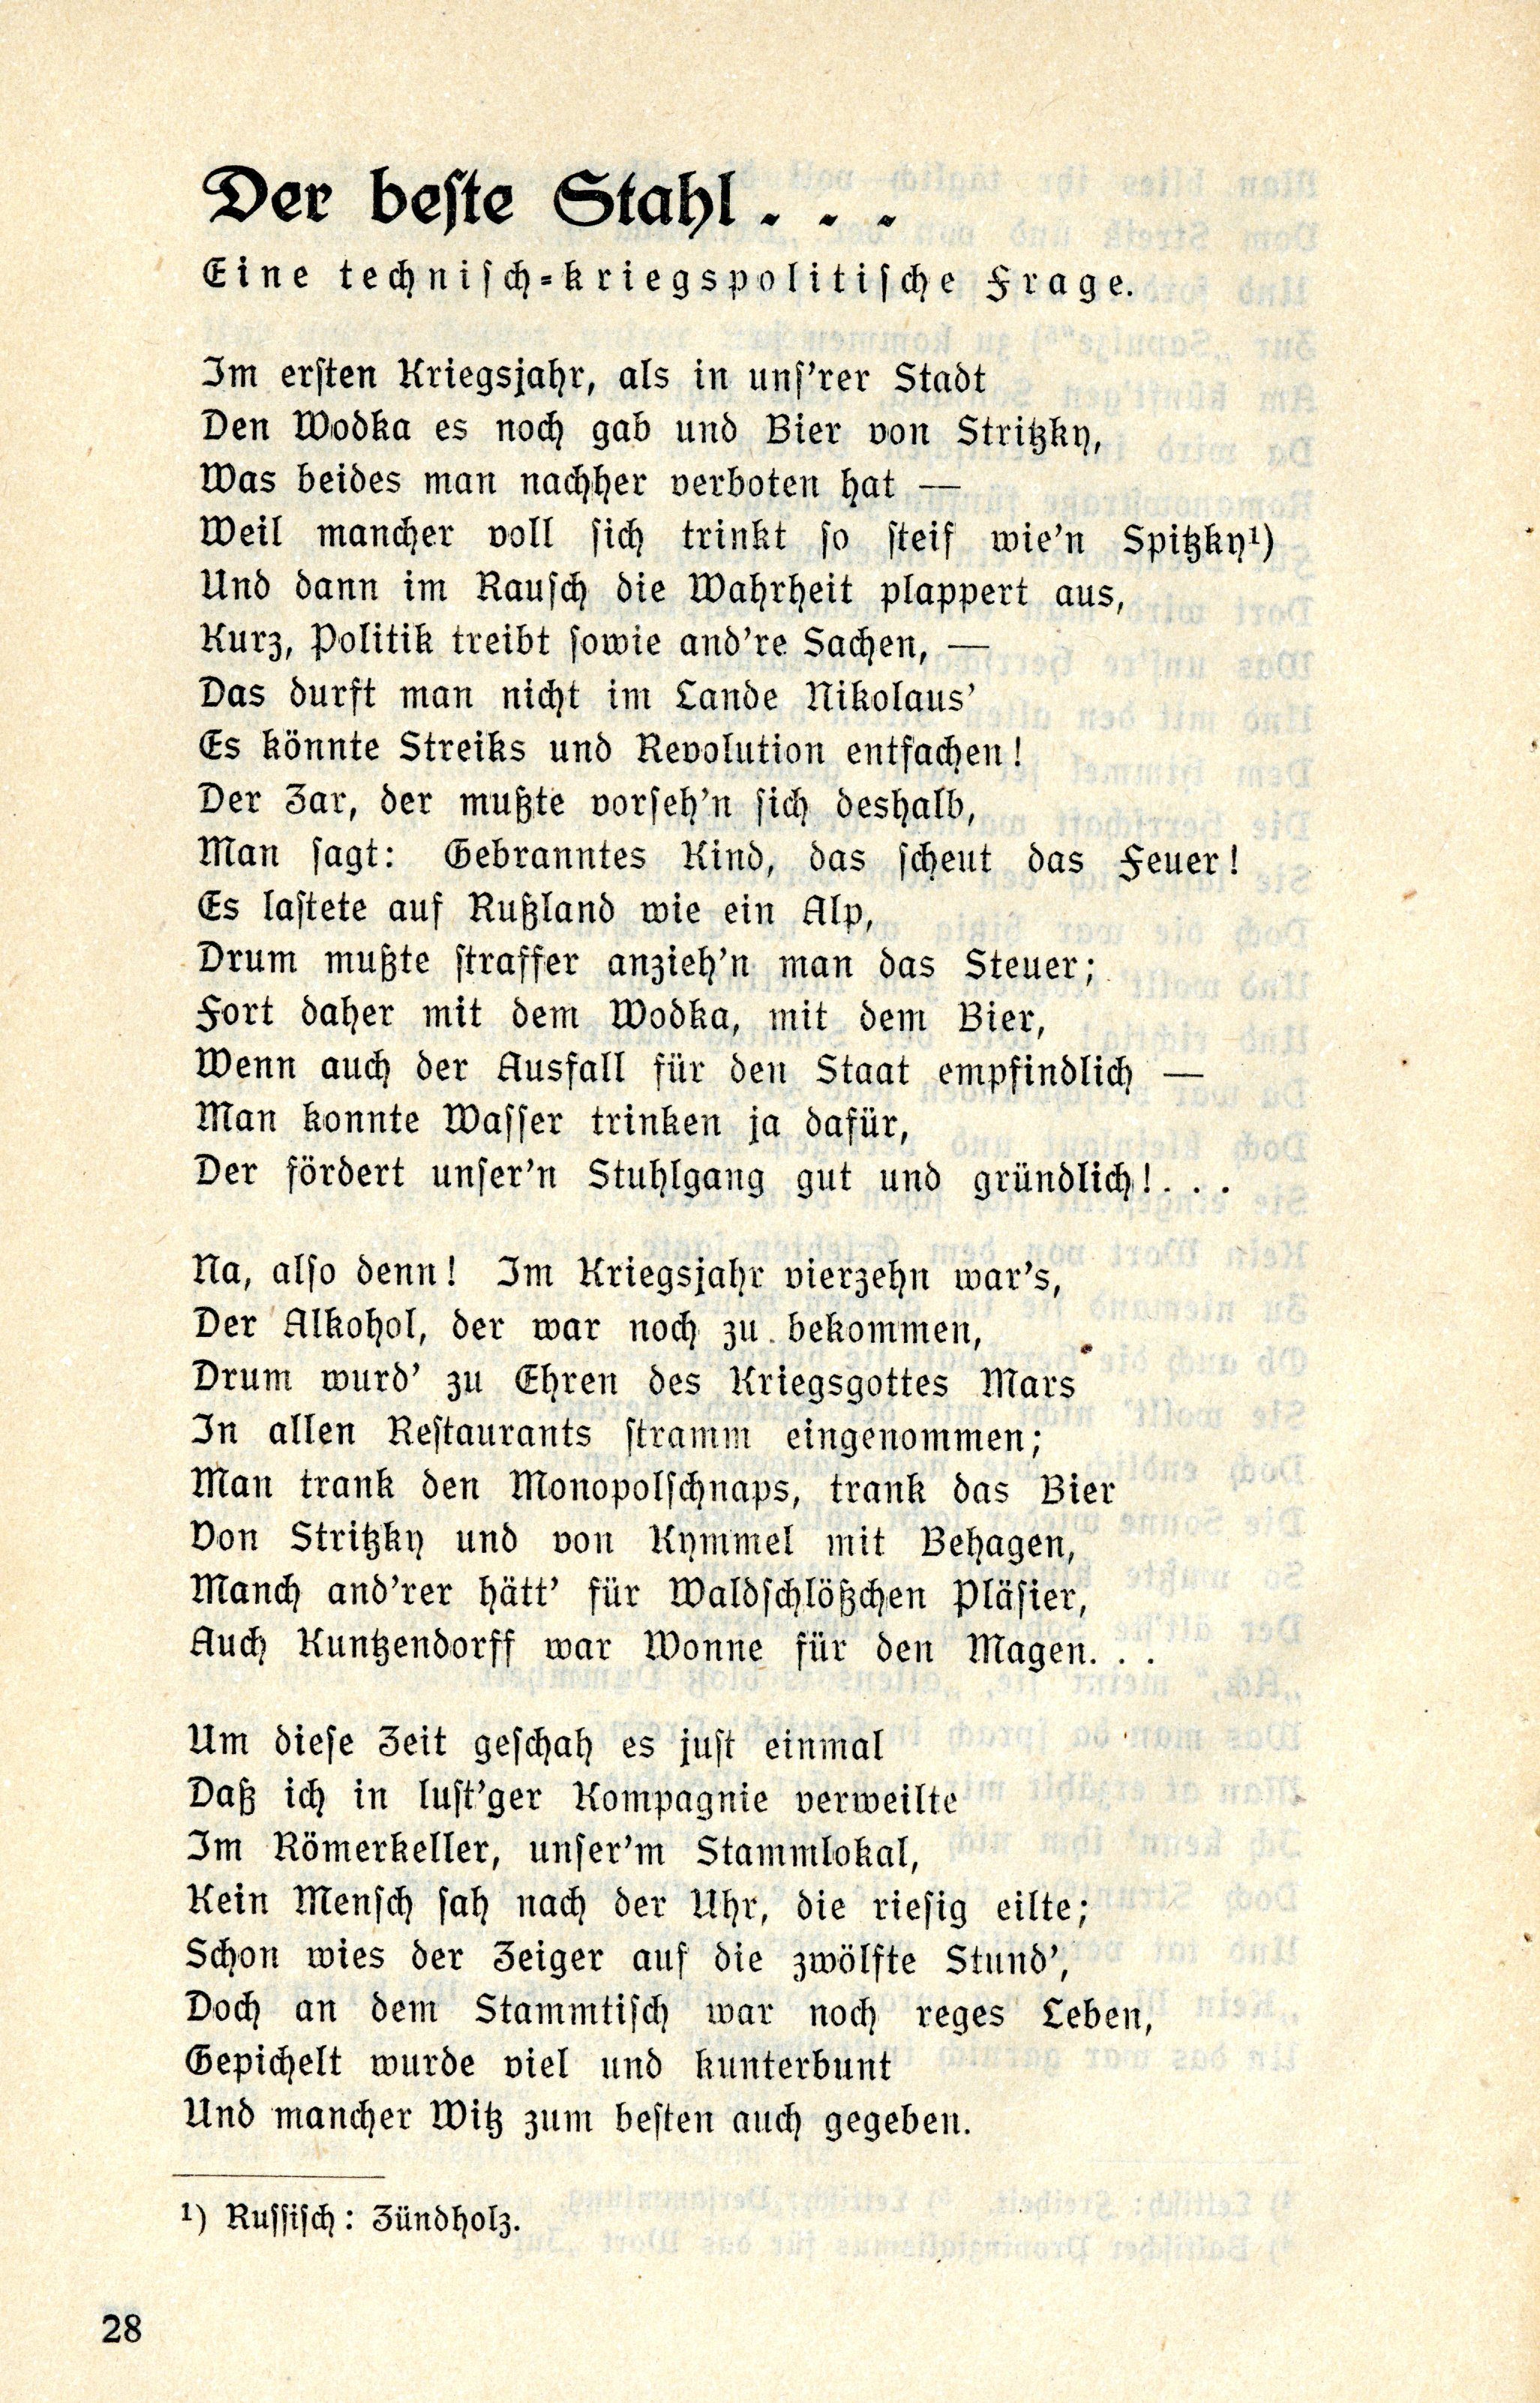 Der Balte im Maulkorb (1917) | 29. (28) Main body of text